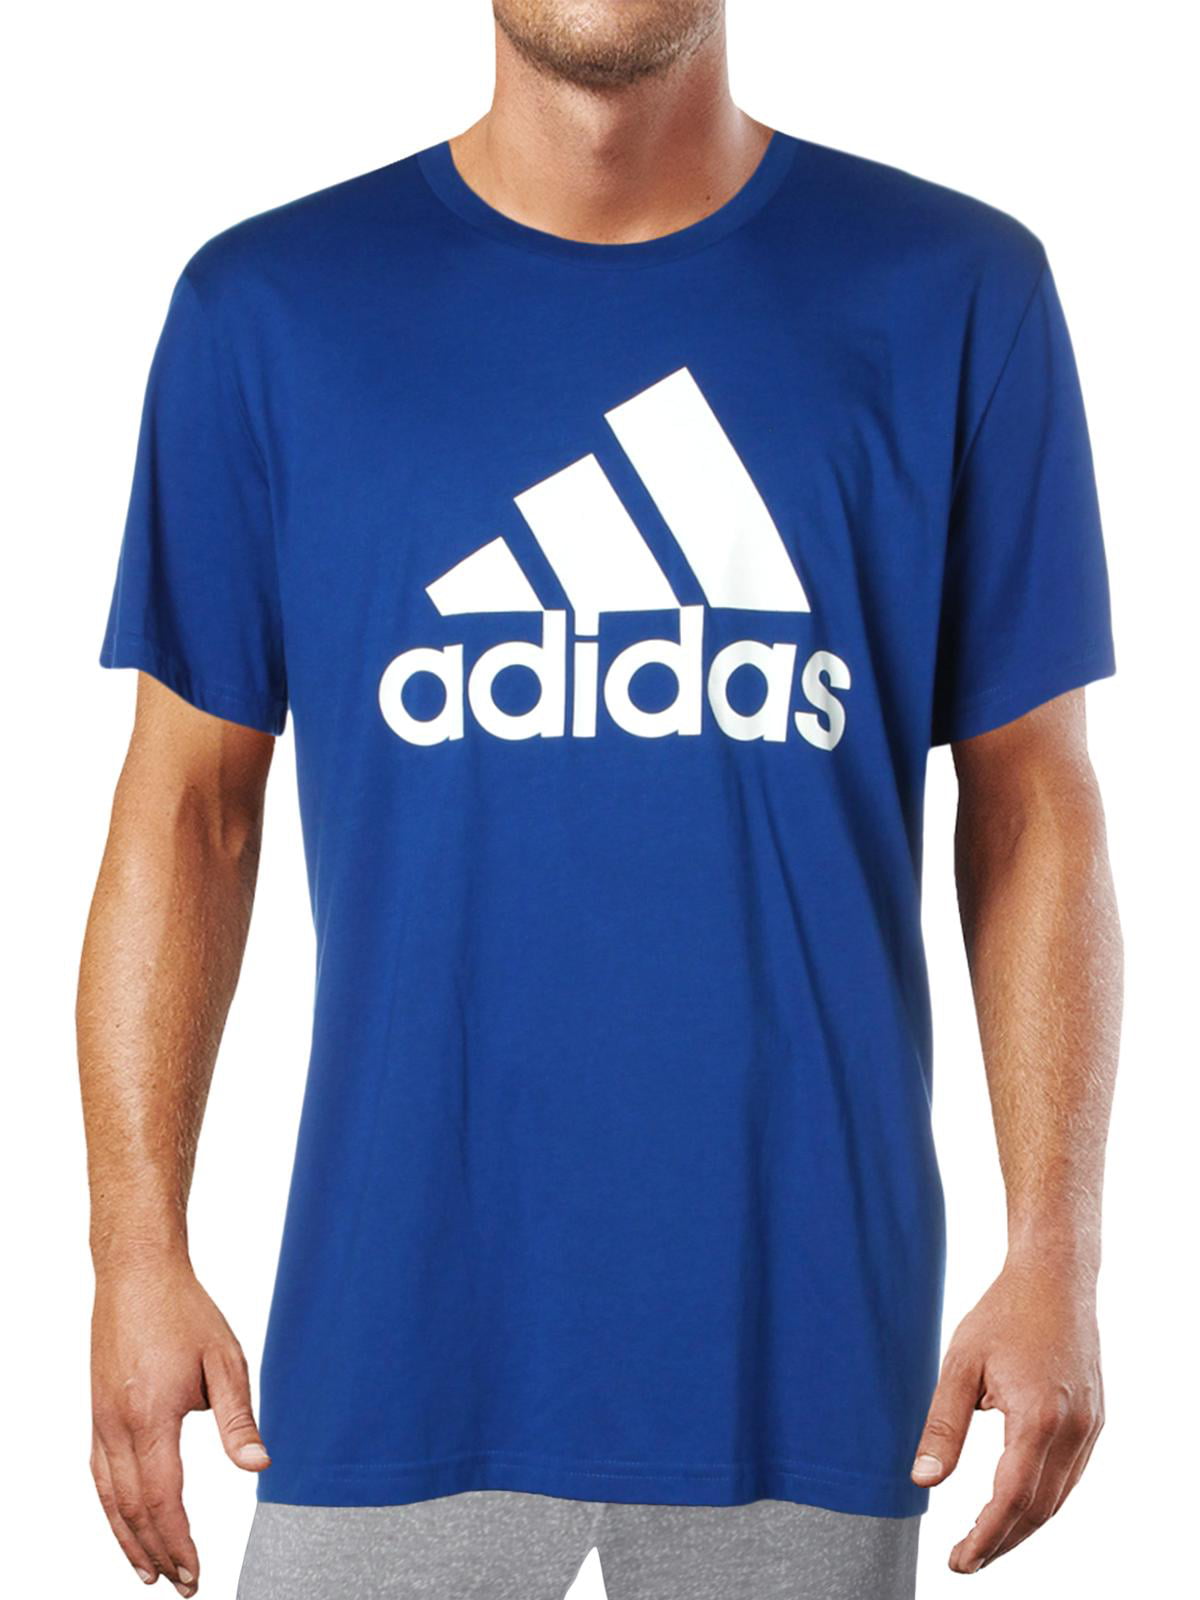 Adidas - Adidas Mens Fitness Running T-Shirt Blue XXL - Walmart.com ...